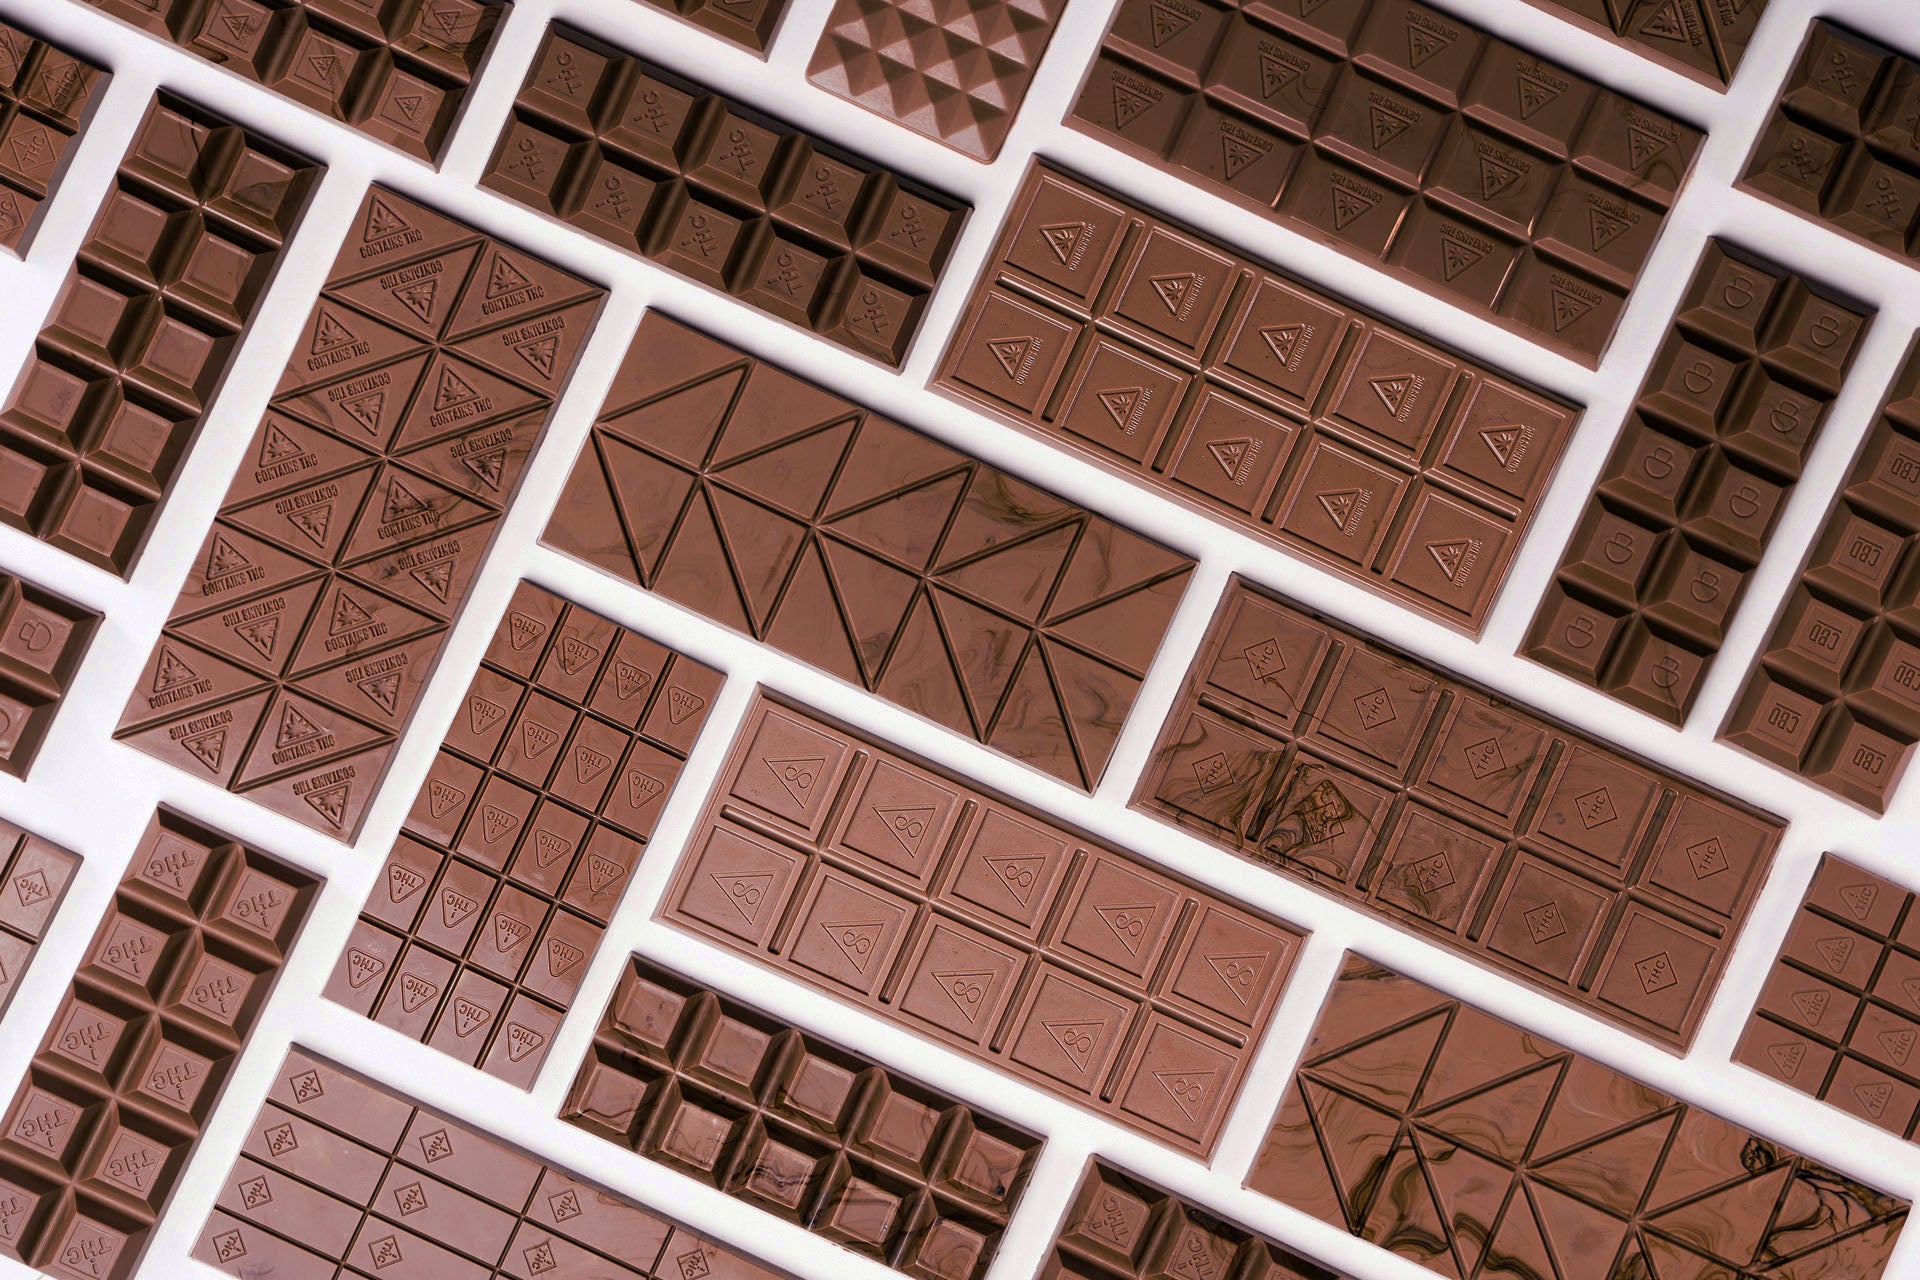 Custom chocolate mold - personalized custom logo silicone mold